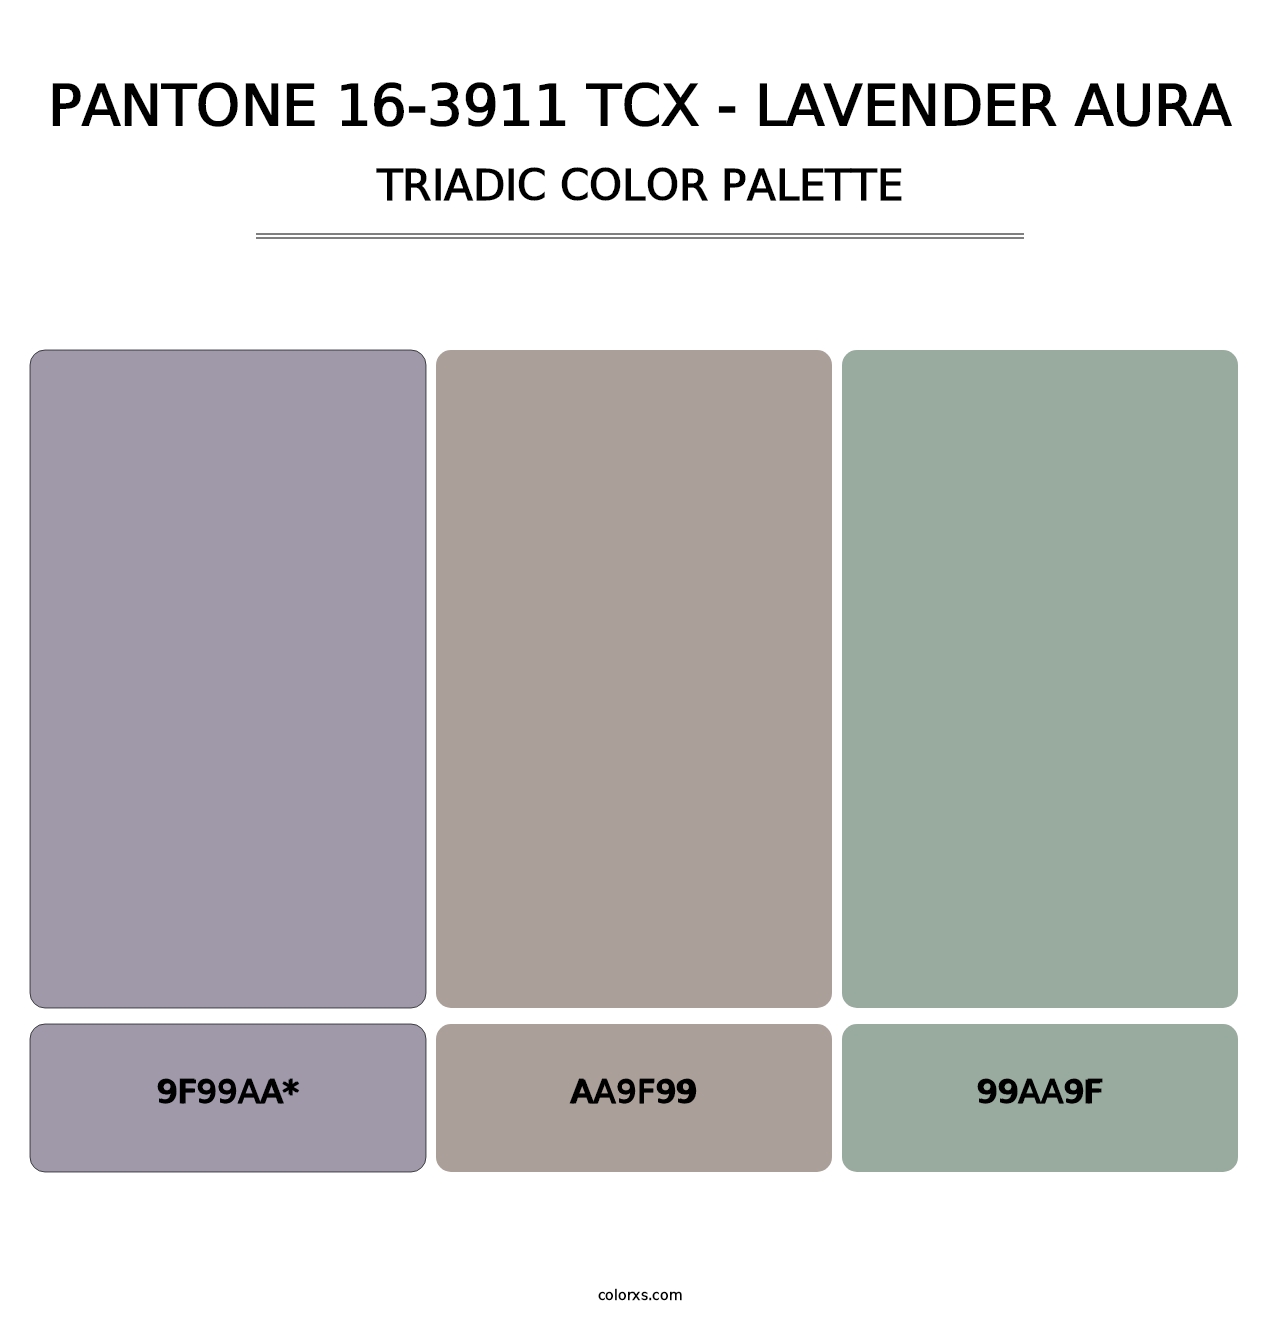 PANTONE 16-3911 TCX - Lavender Aura - Triadic Color Palette